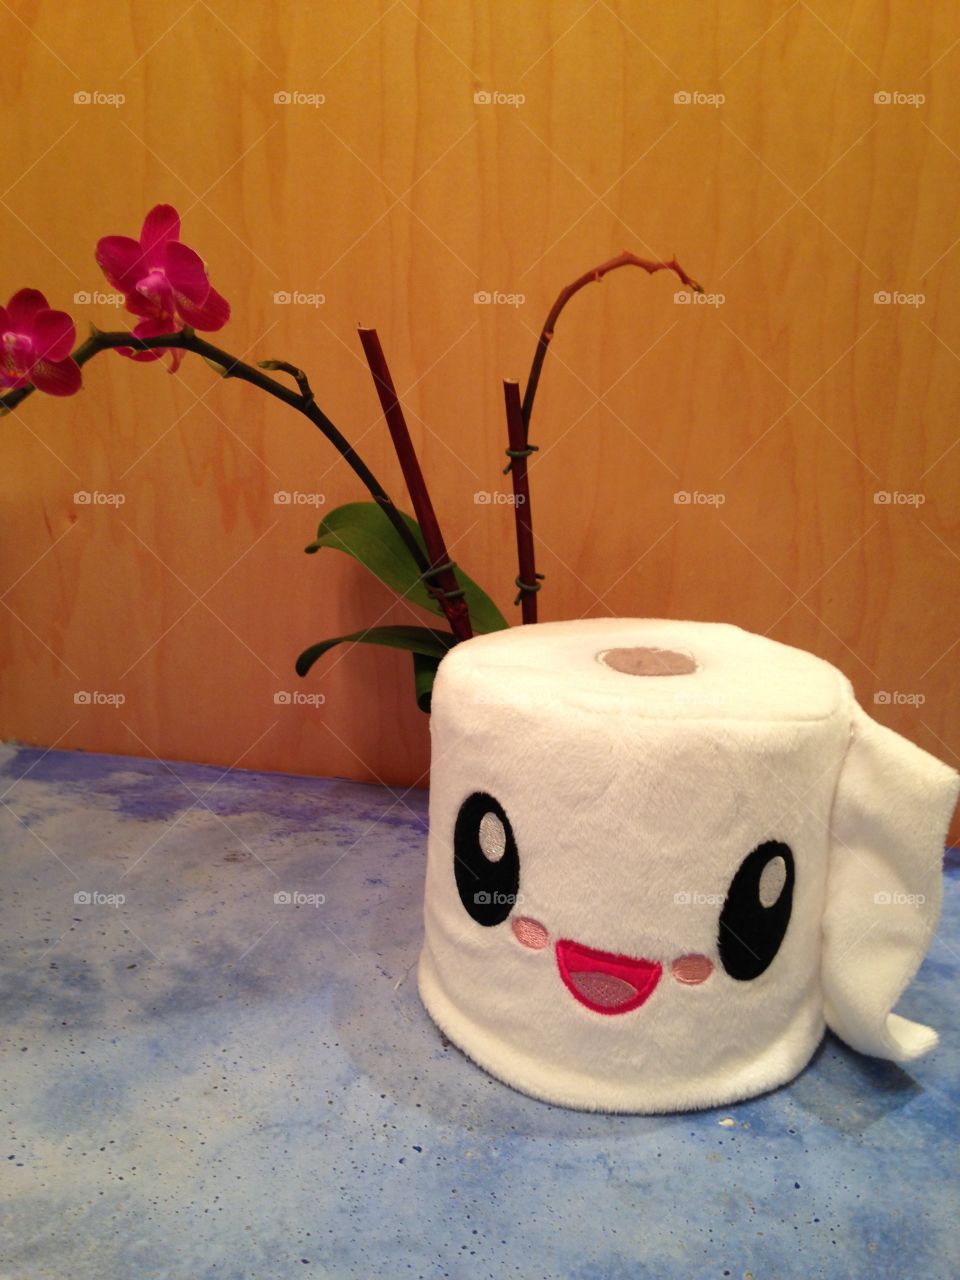 Cute toilet paper holder